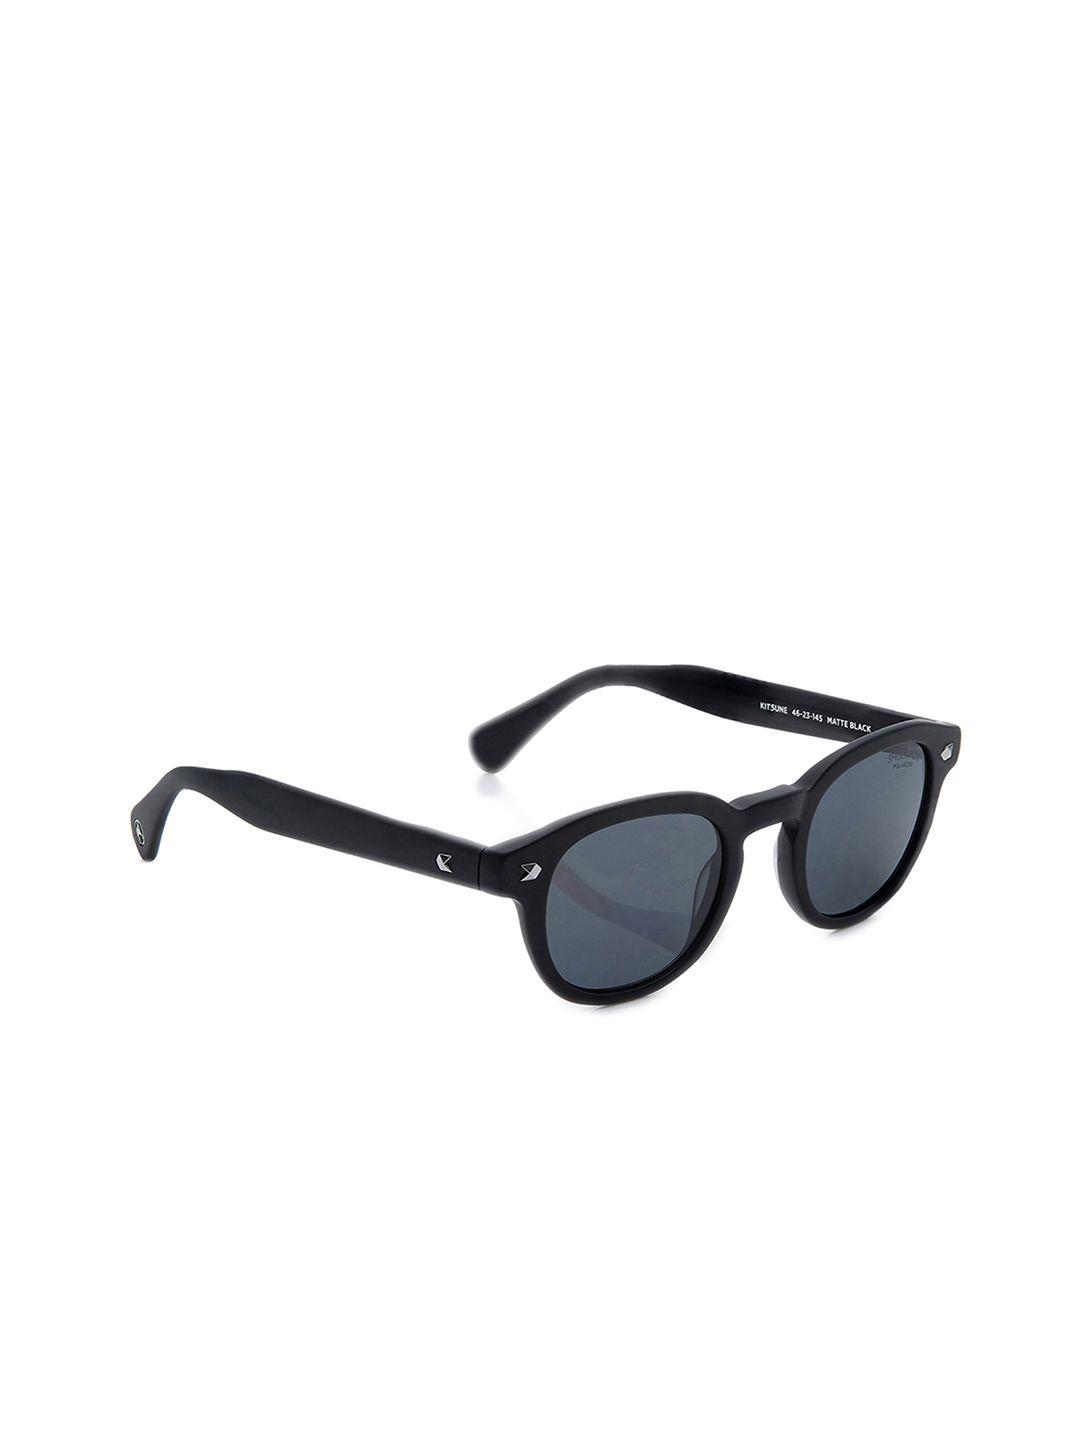 shisen fox kitsune matte black + polarized unisex oval sunglasses polarised & uv protected lens